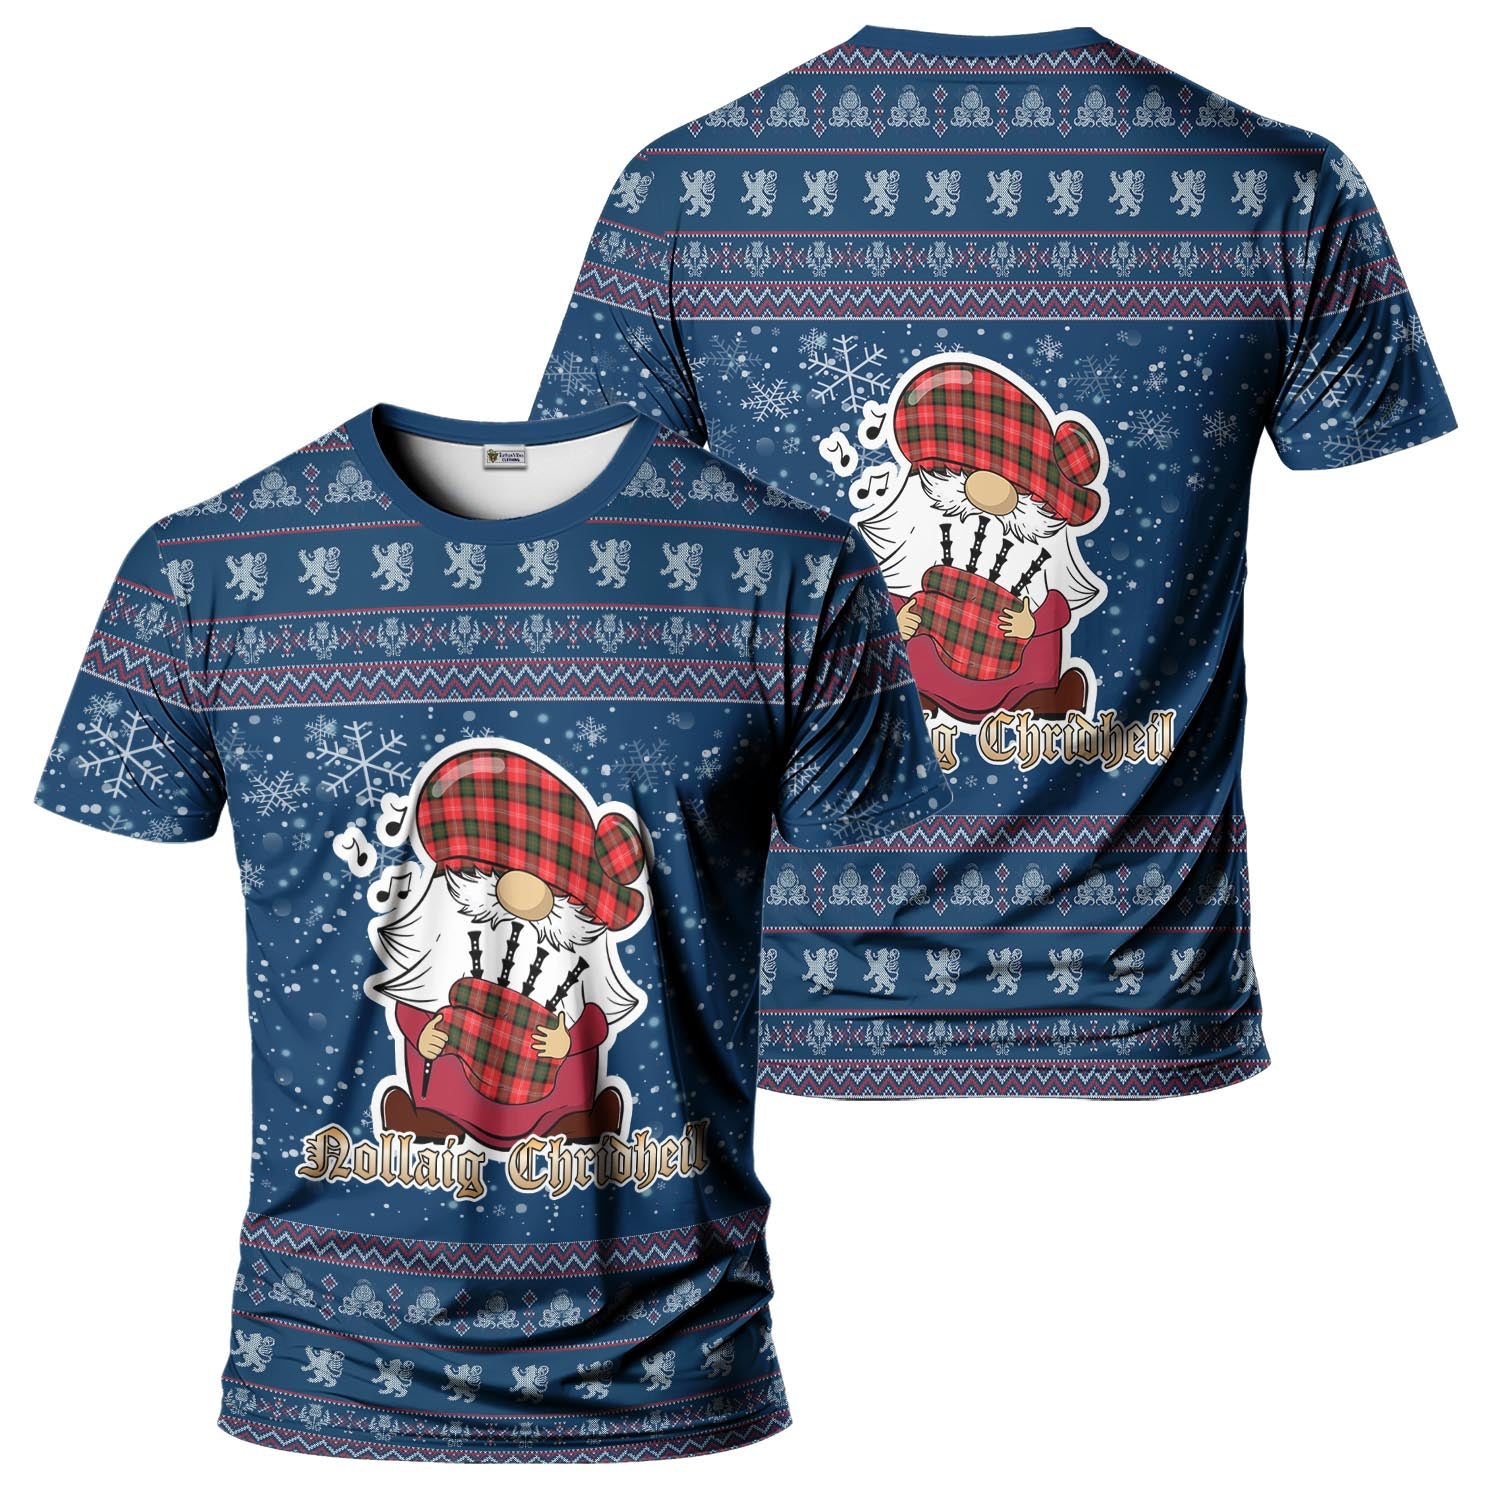 Nesbitt Modern Clan Christmas Family T-Shirt with Funny Gnome Playing Bagpipes Kid's Shirt Blue - Tartanvibesclothing